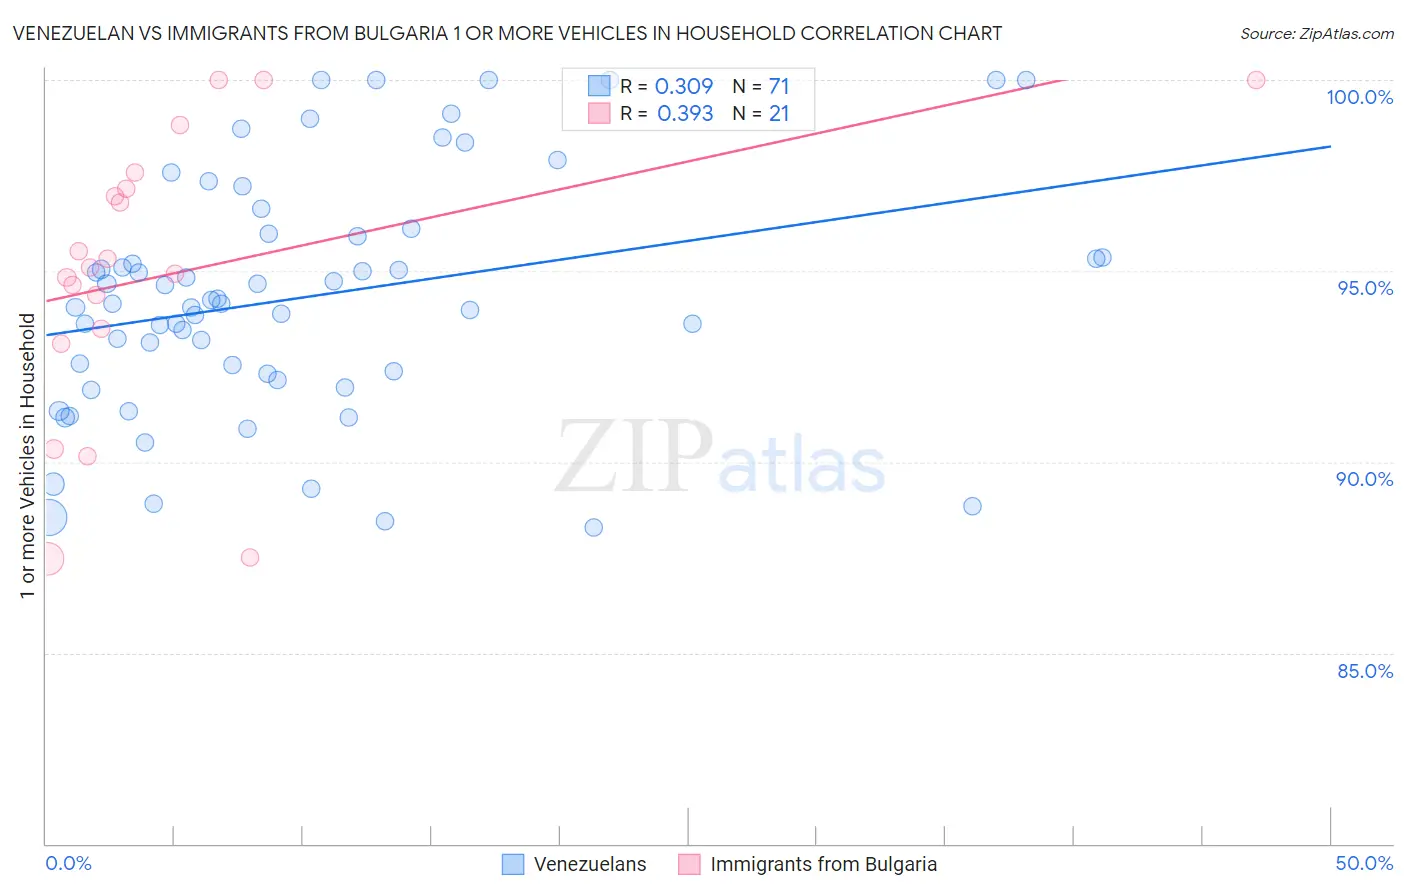 Venezuelan vs Immigrants from Bulgaria 1 or more Vehicles in Household